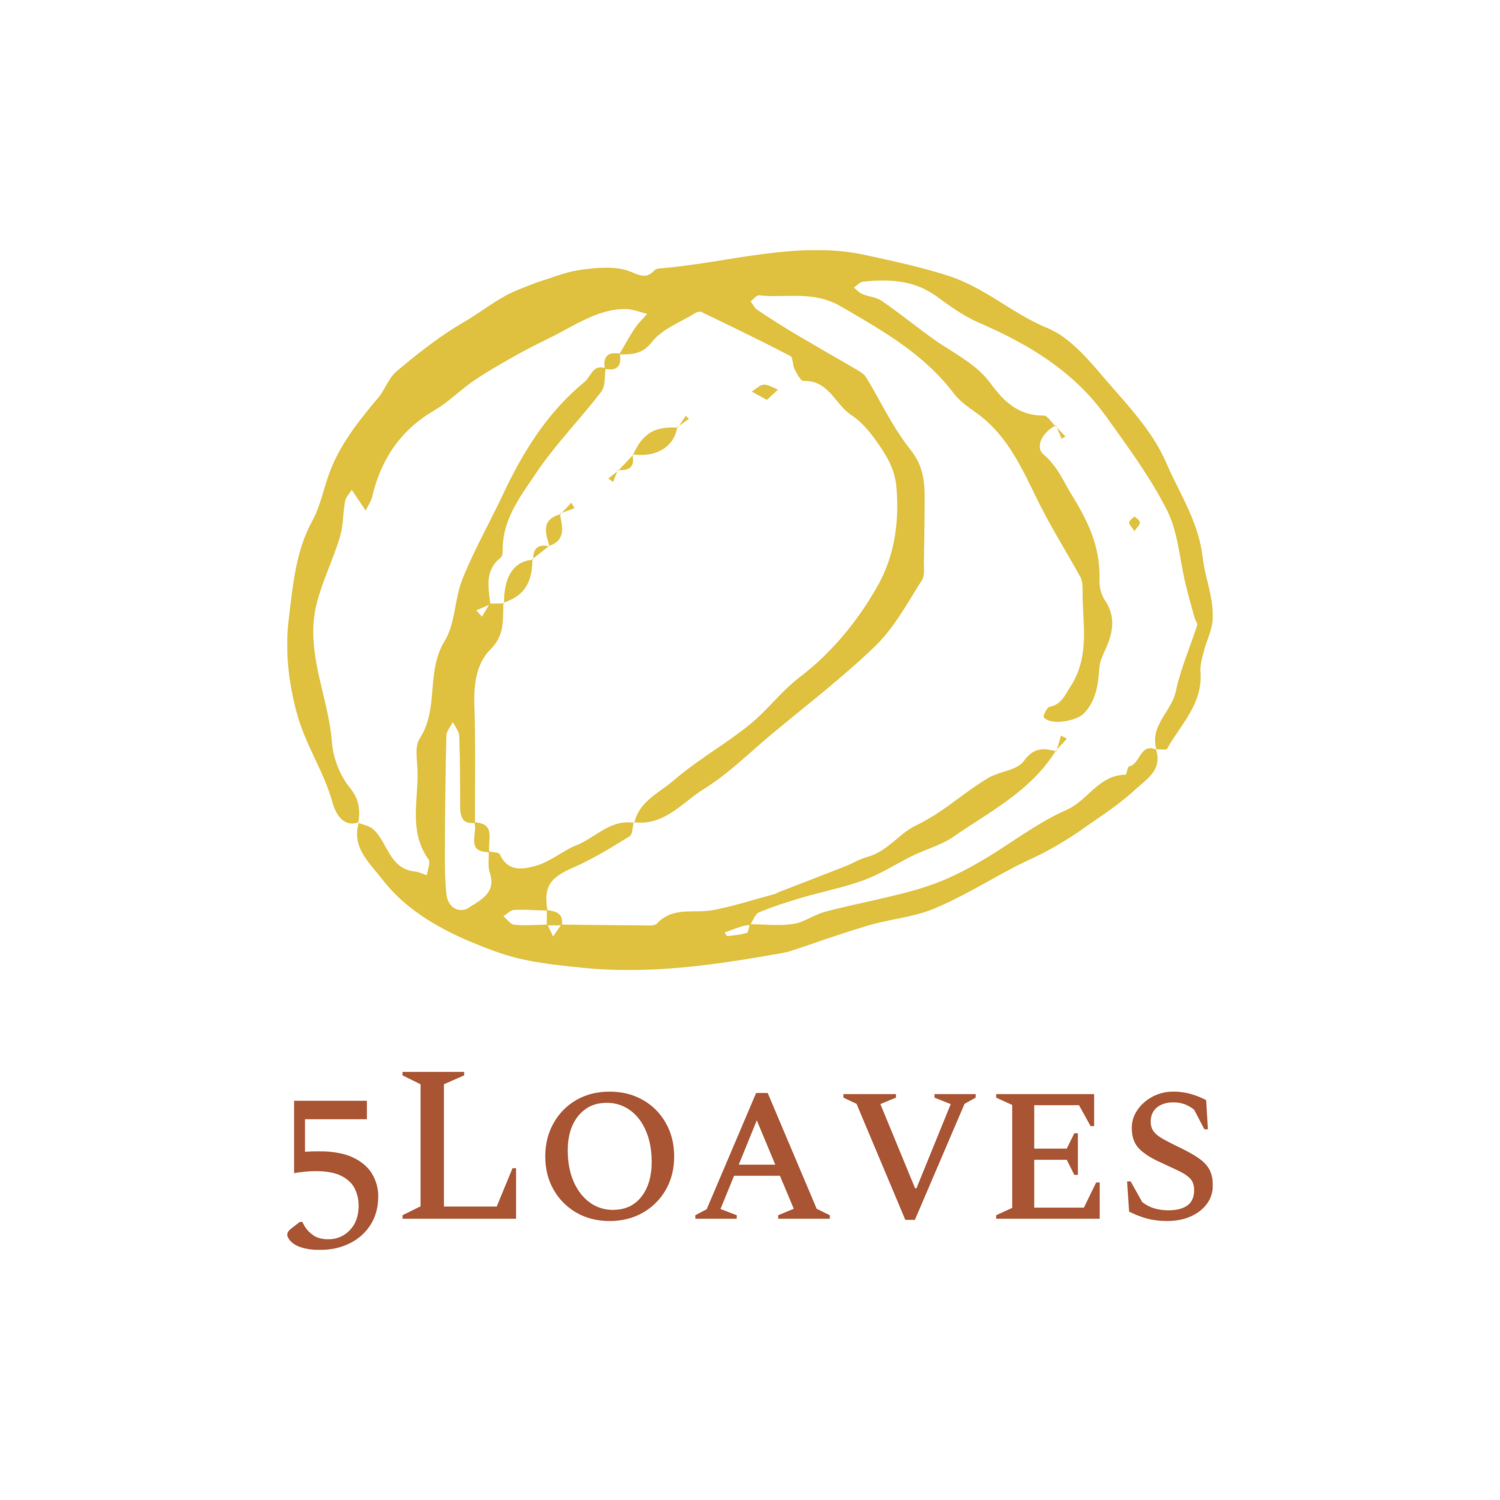 5 Loaves